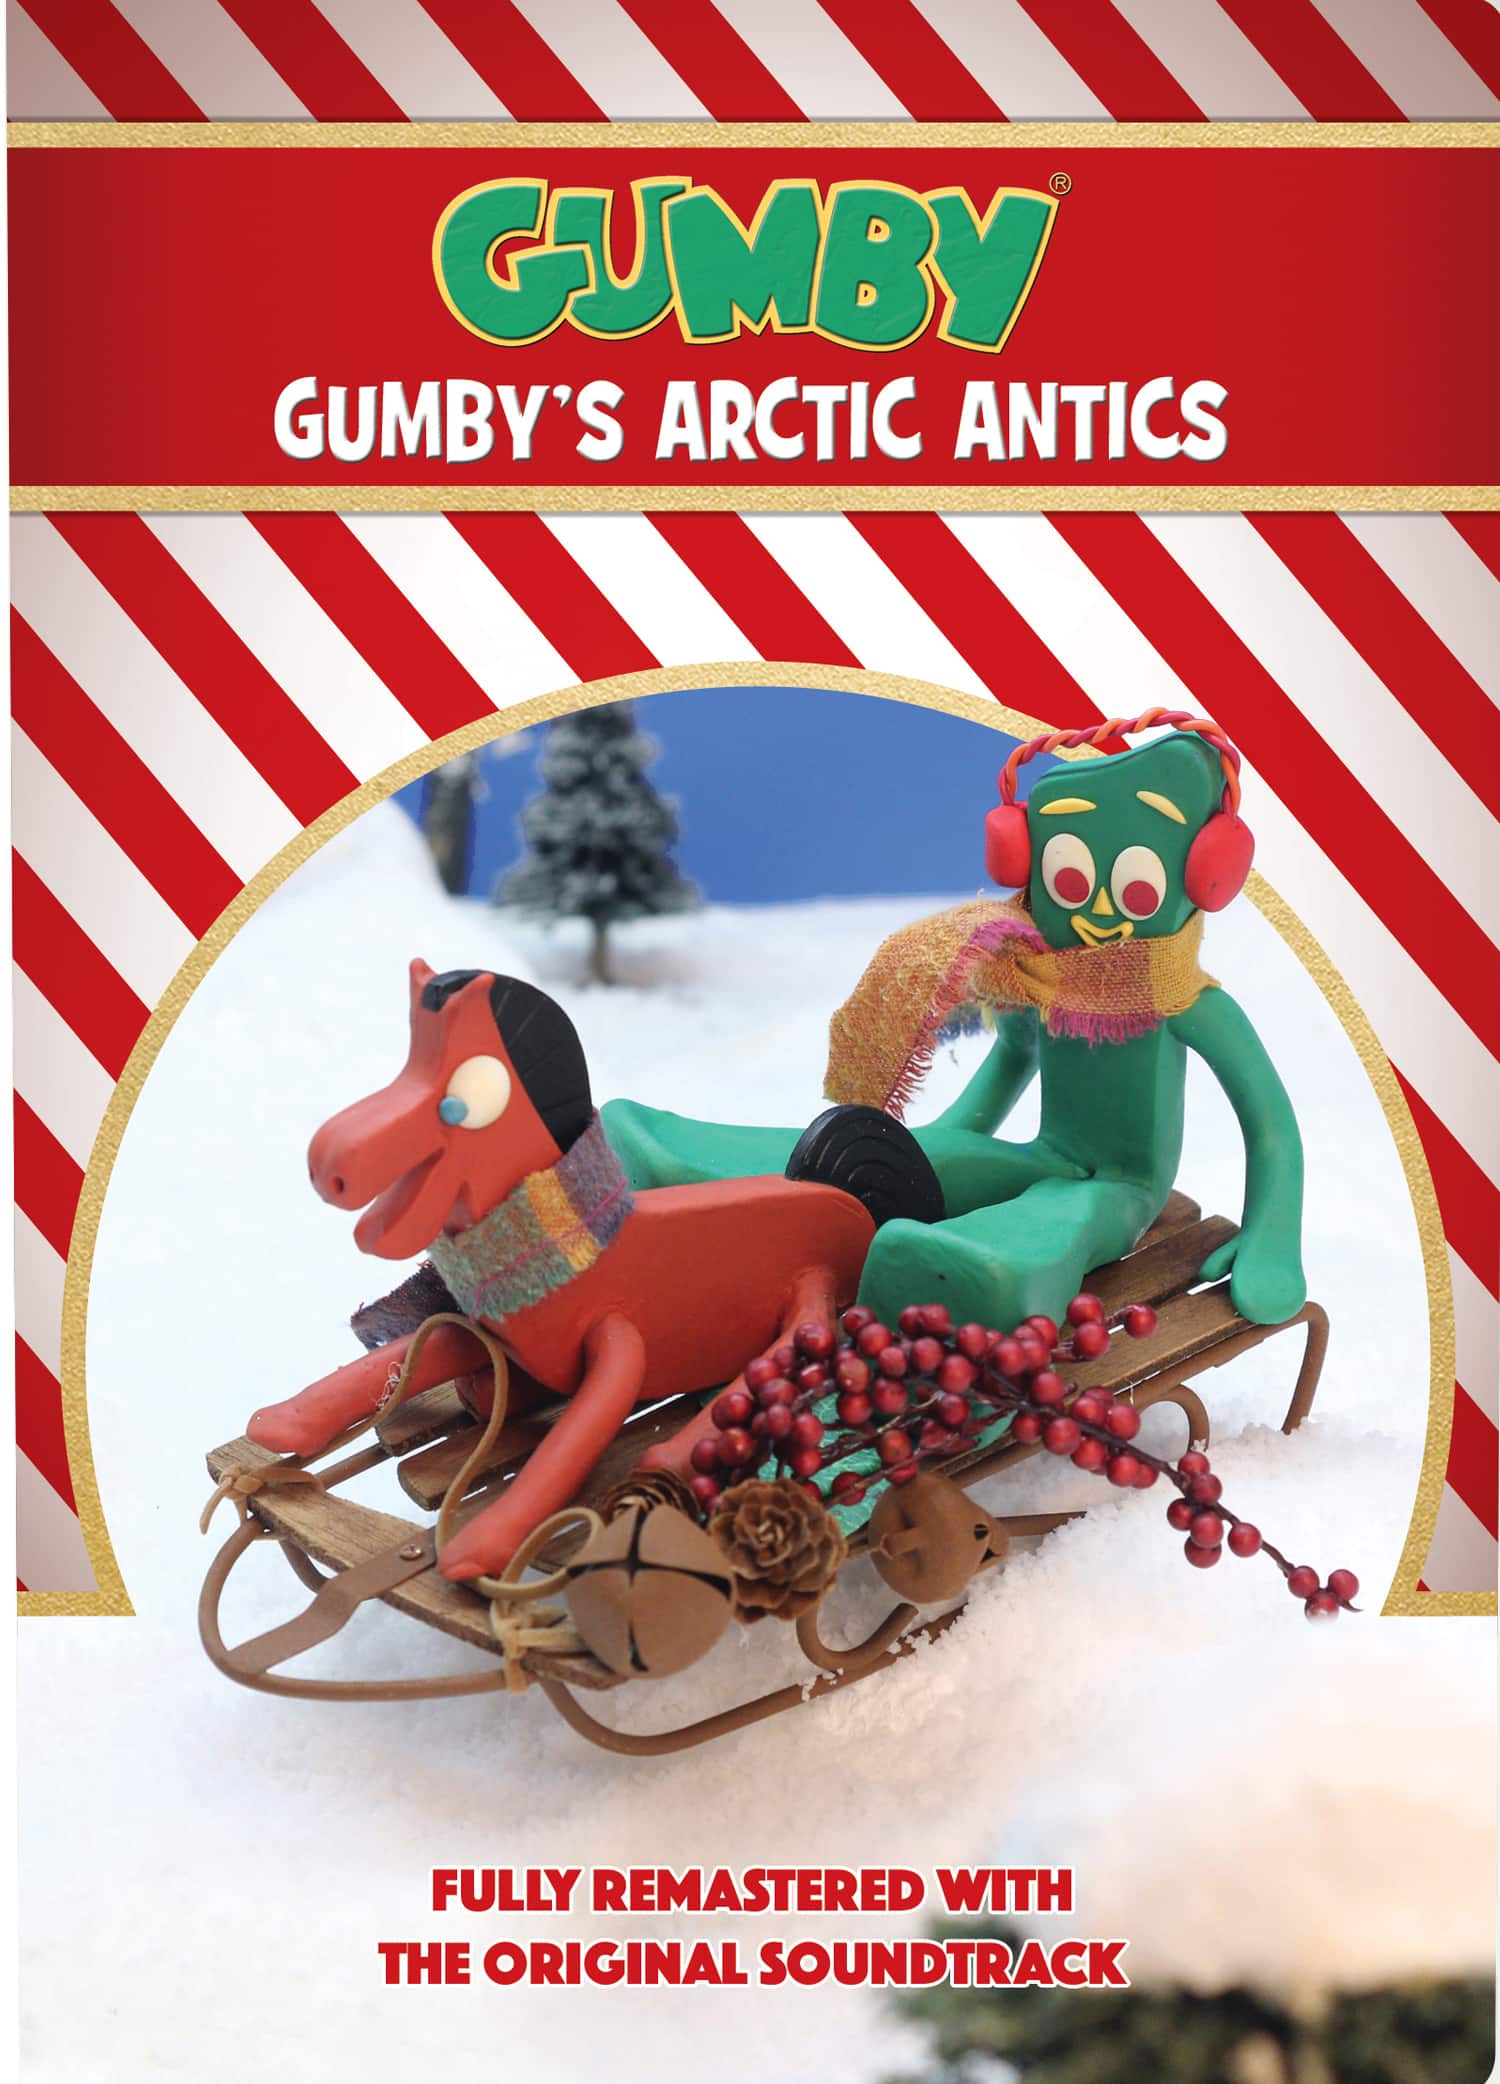 Gumby: Gumby’s Arctic Antics – Humorous and Nostalgic Family Entertainment